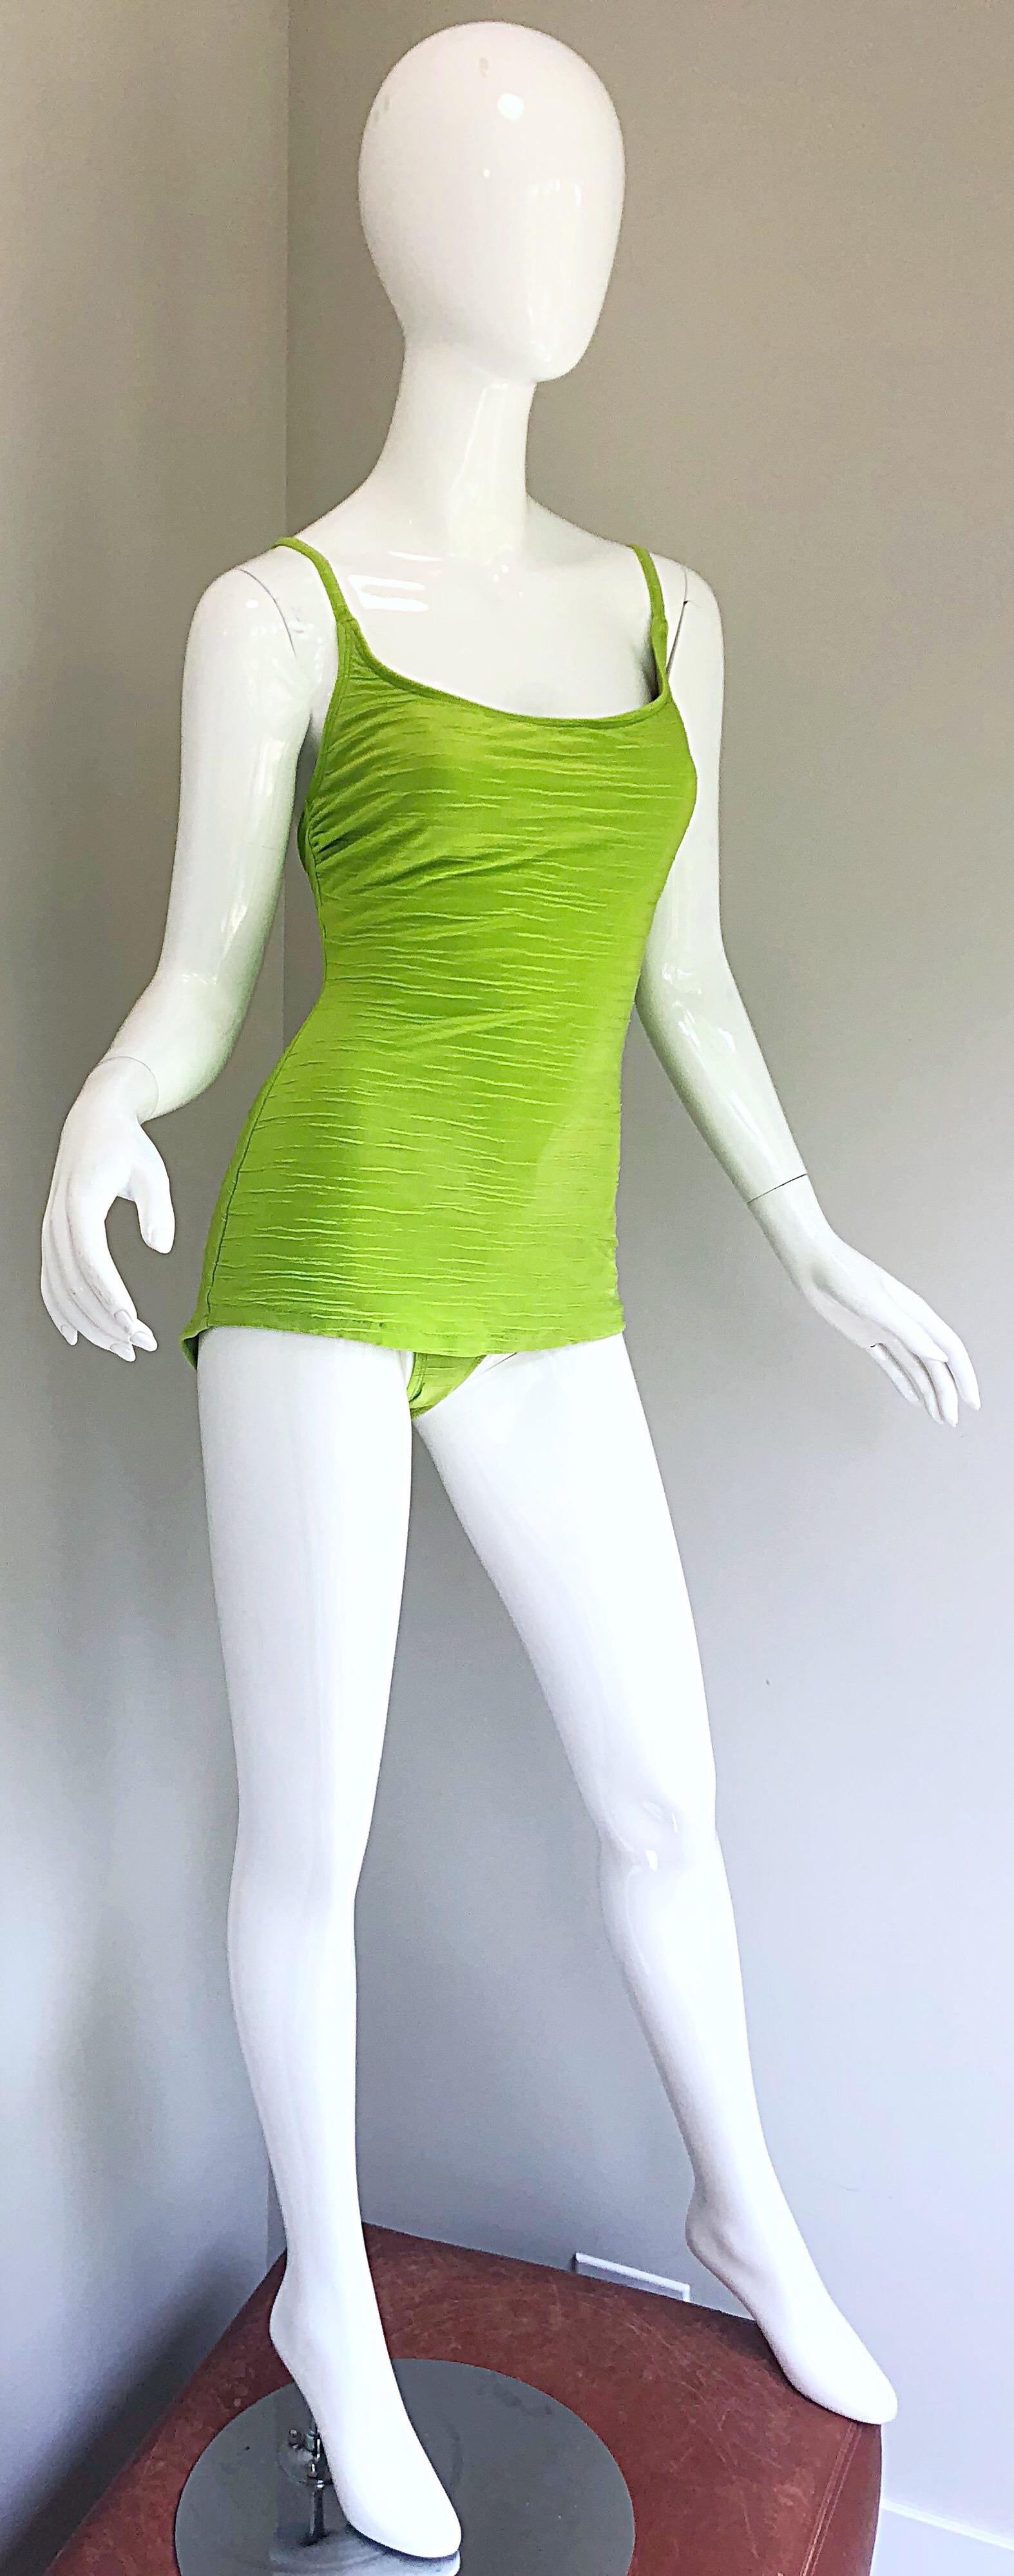 Size 14 Oscar de la Renta Neon Lime Green One Piece 60s Style Swimsuit Bodysuit For Sale 3